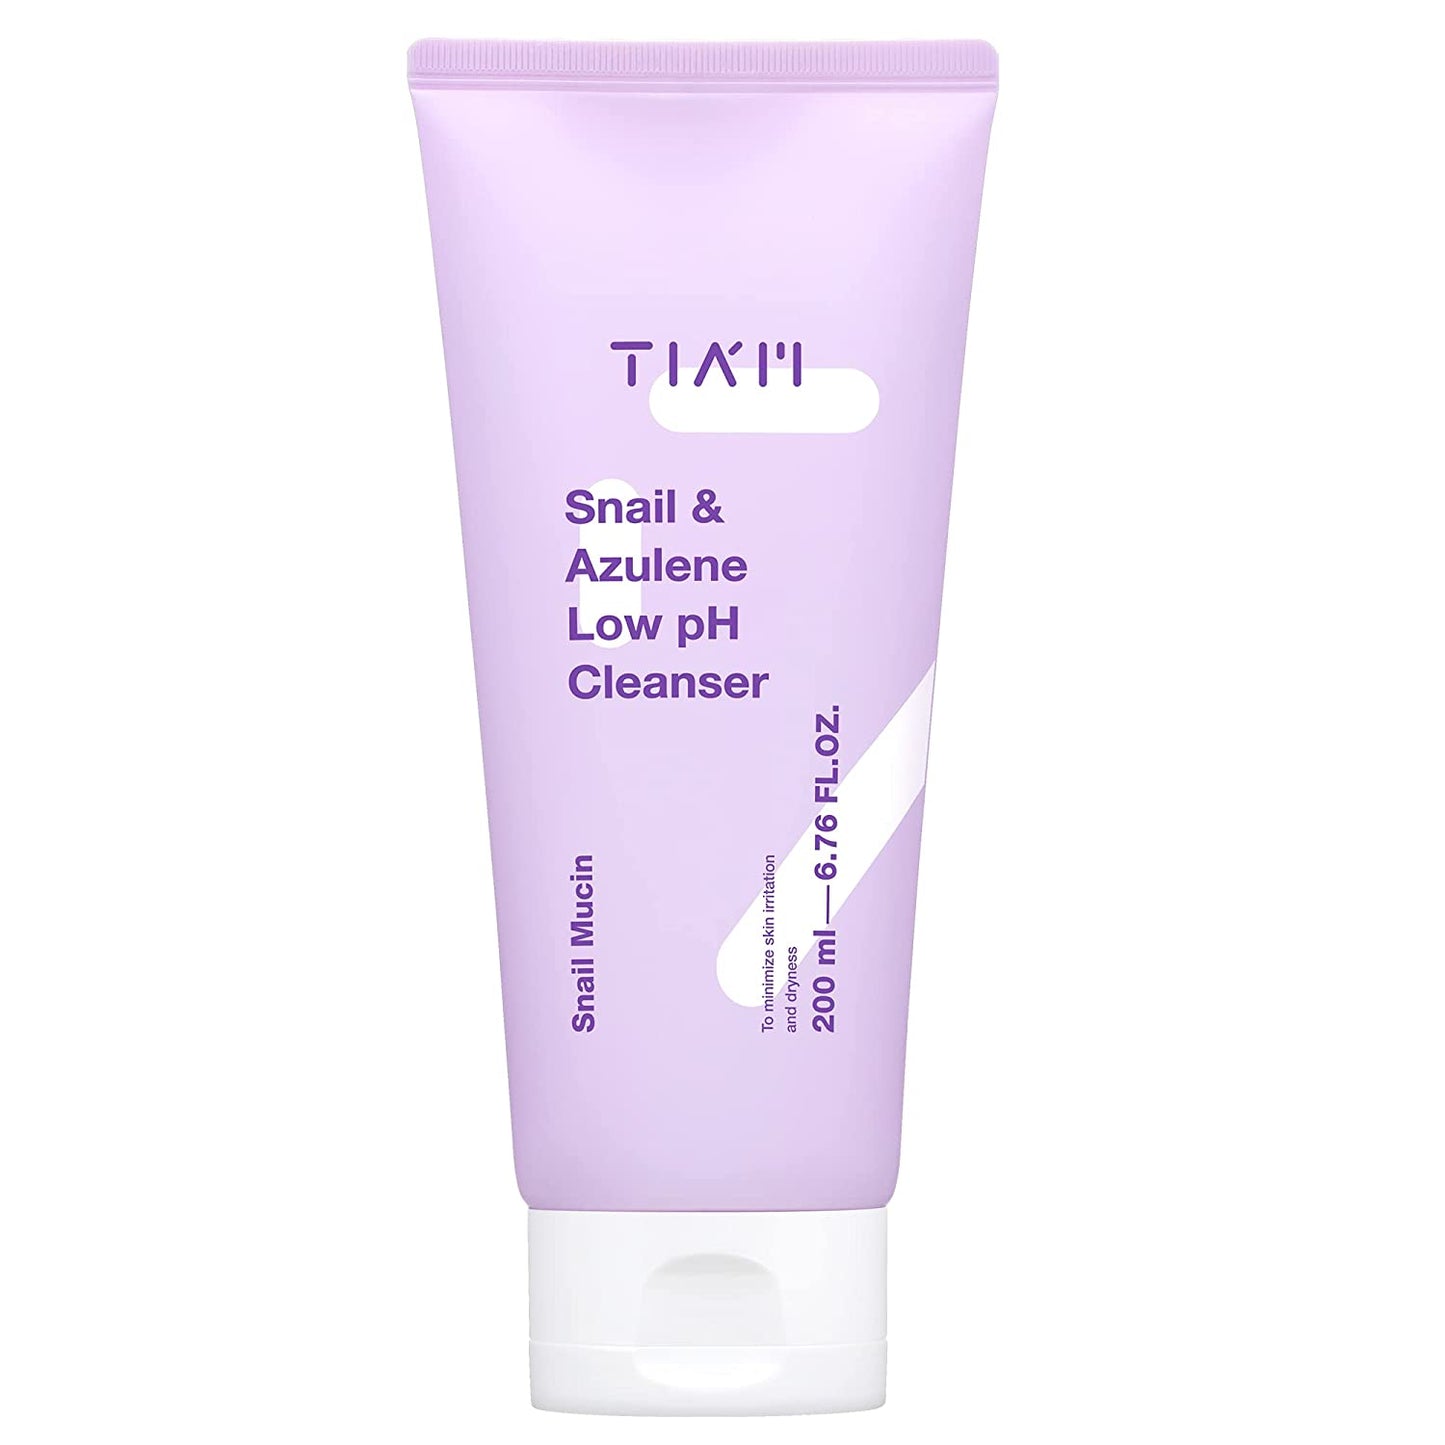 TIAM Snail&Azulene Low pH Cleanser, Gel Facial Cleanser, Snail Secretion Filtrate, pH Balancing, Anti Acne (200ml 6.76fl oz.)